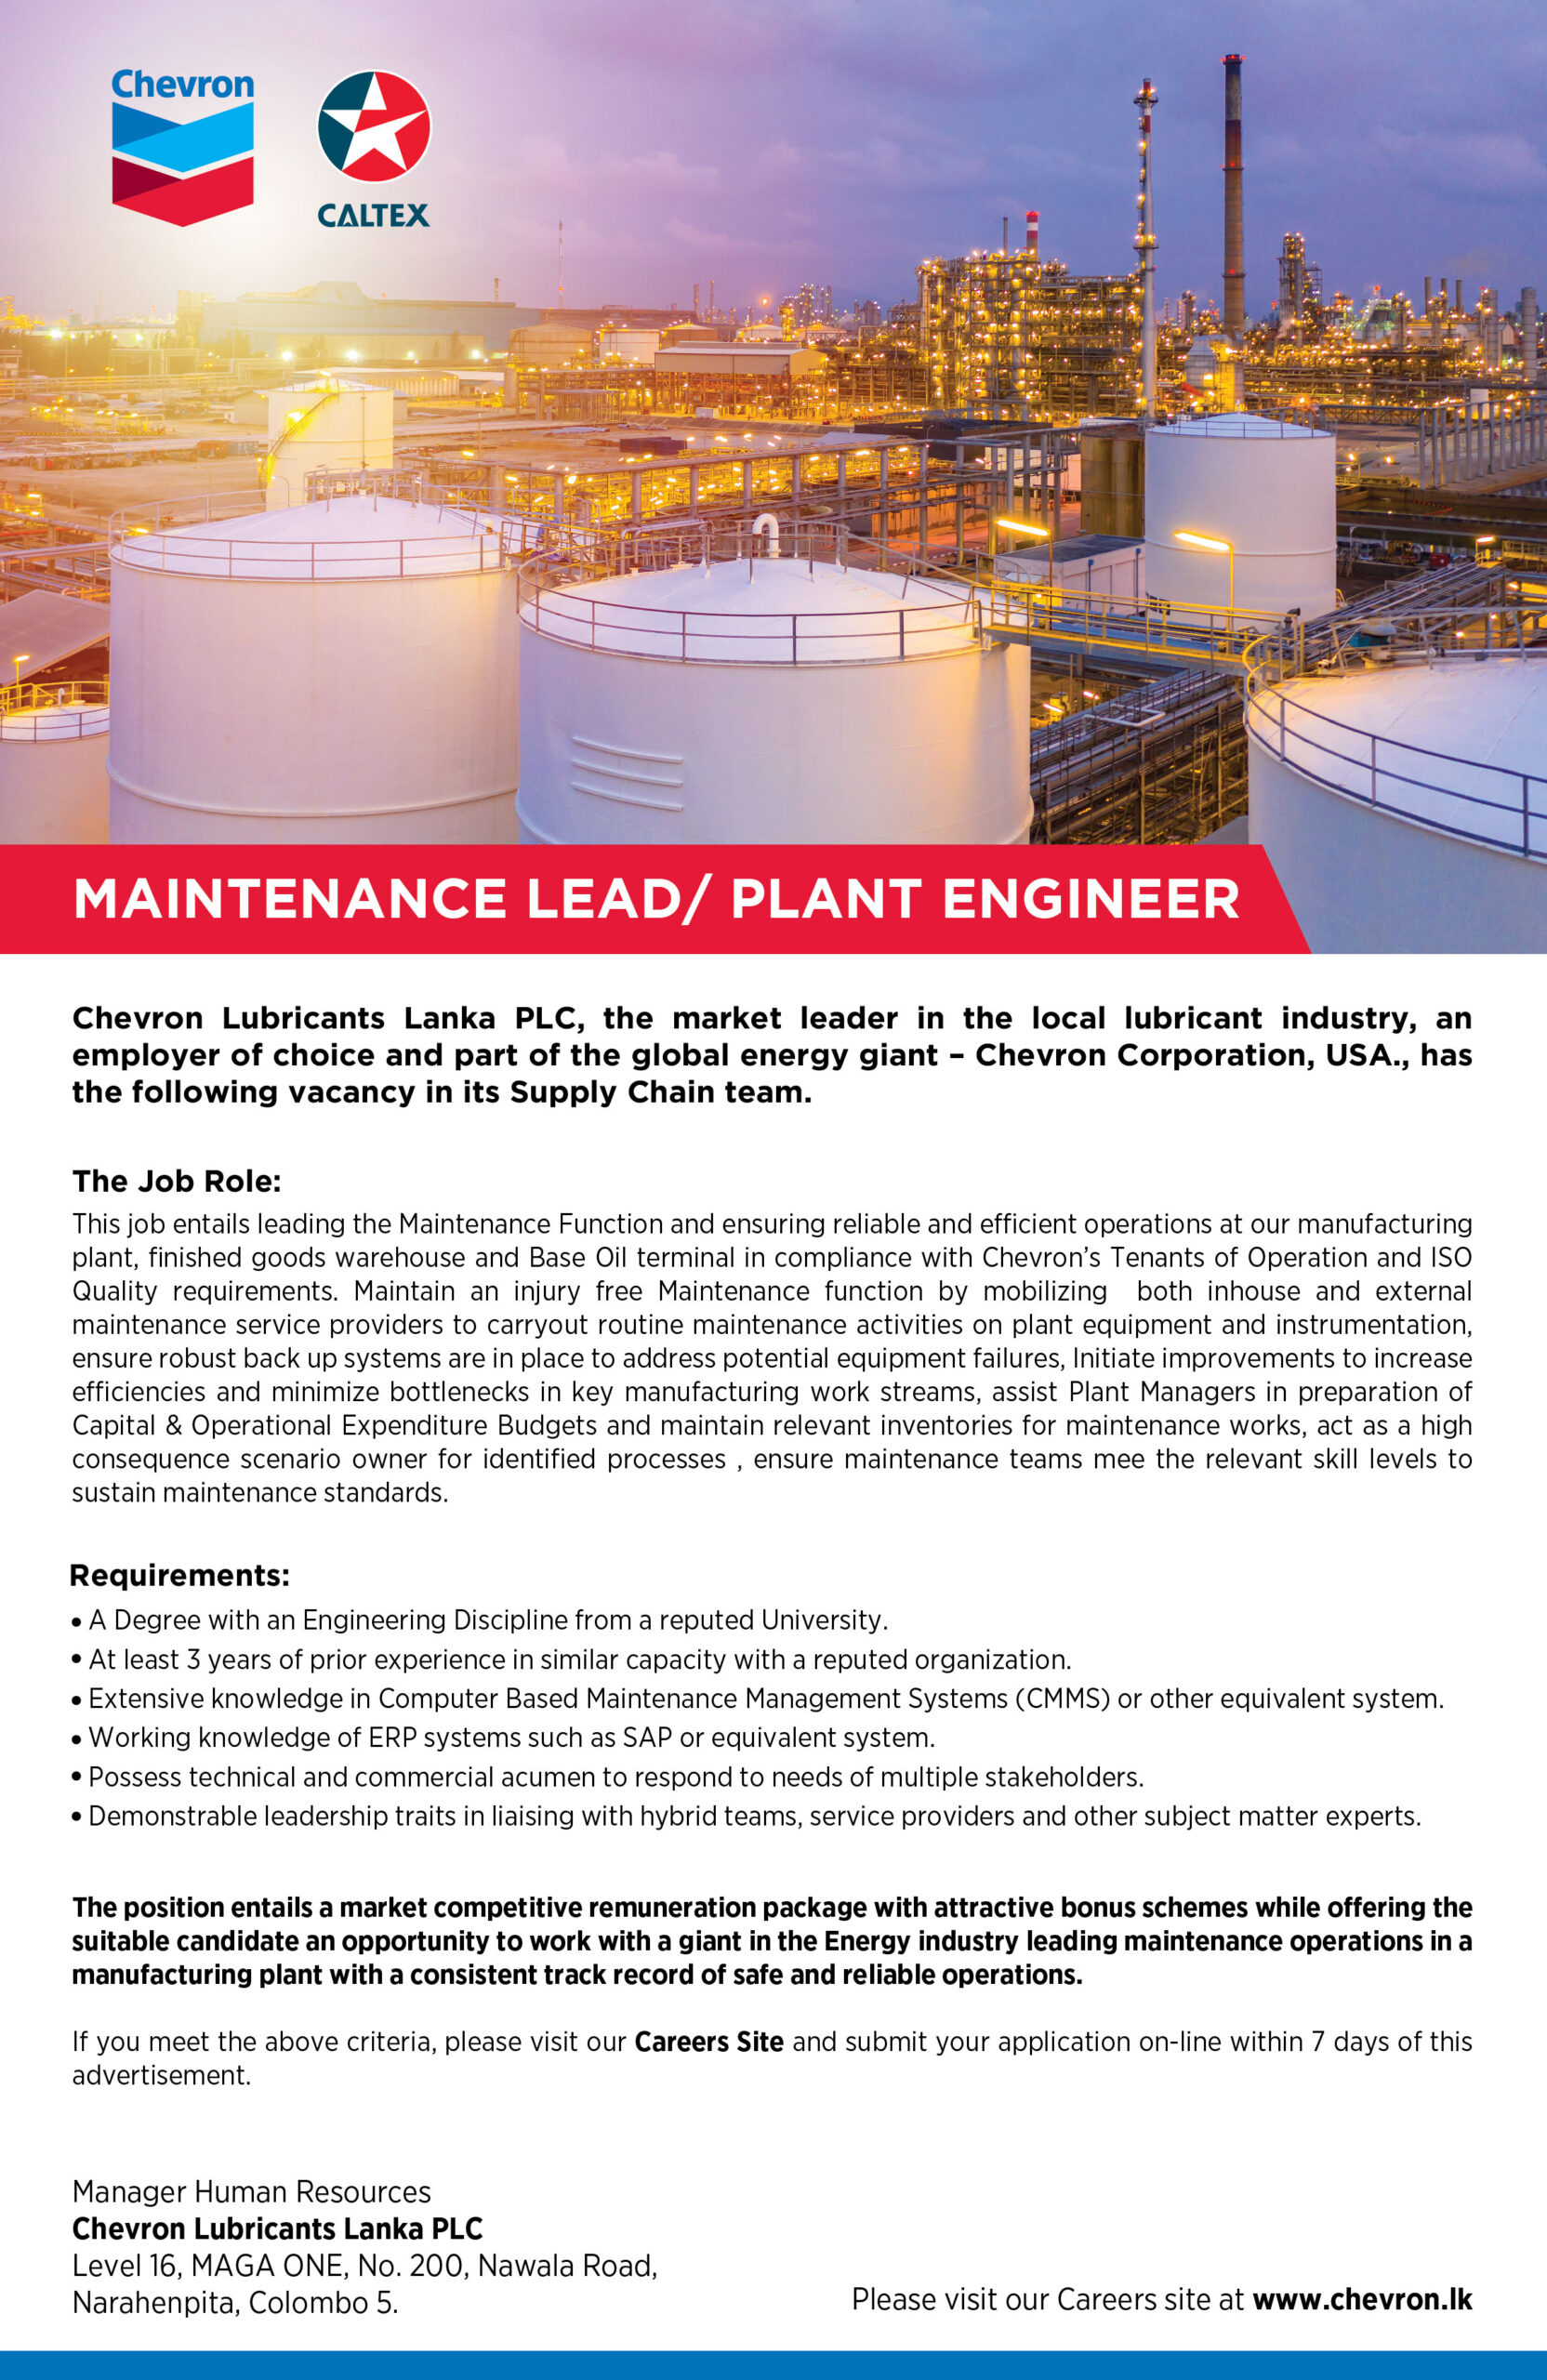 Maintenance Lead / Plan Engineer Jobs - Chevron Lubricants Lanka PLC Jobs Vacancies